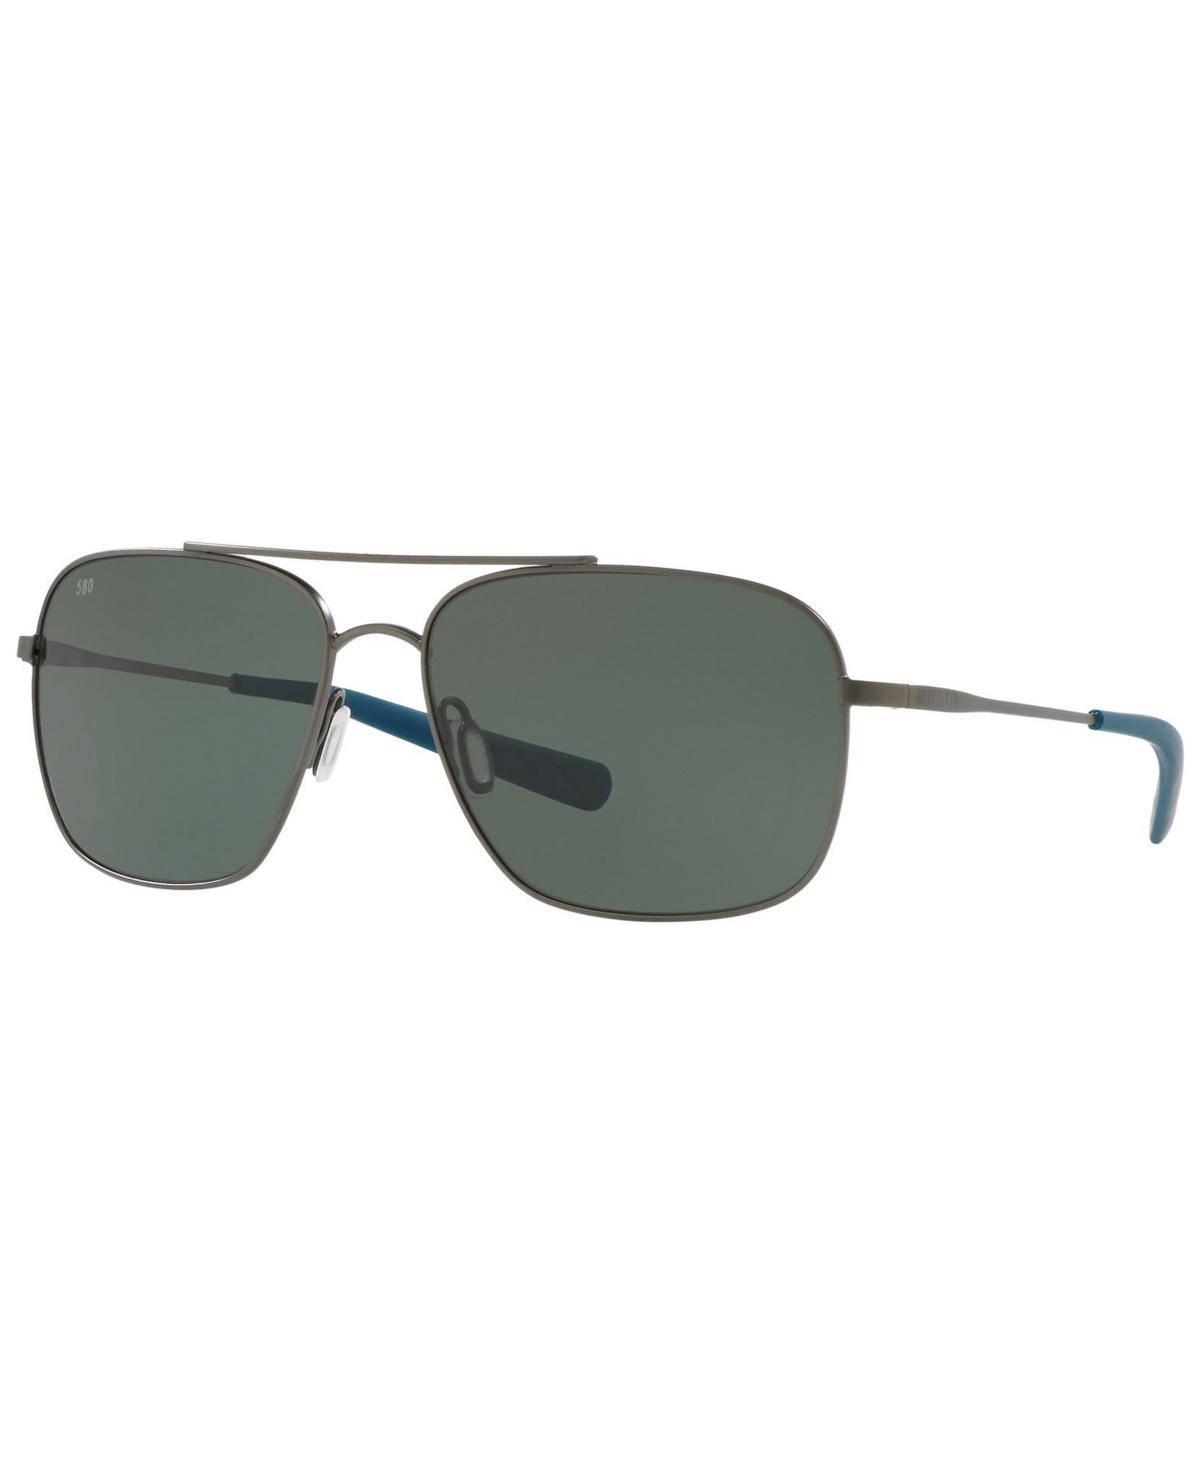 Polarized Sunglasses, Blackfinp - GUNMETAL/ GREY POLAR